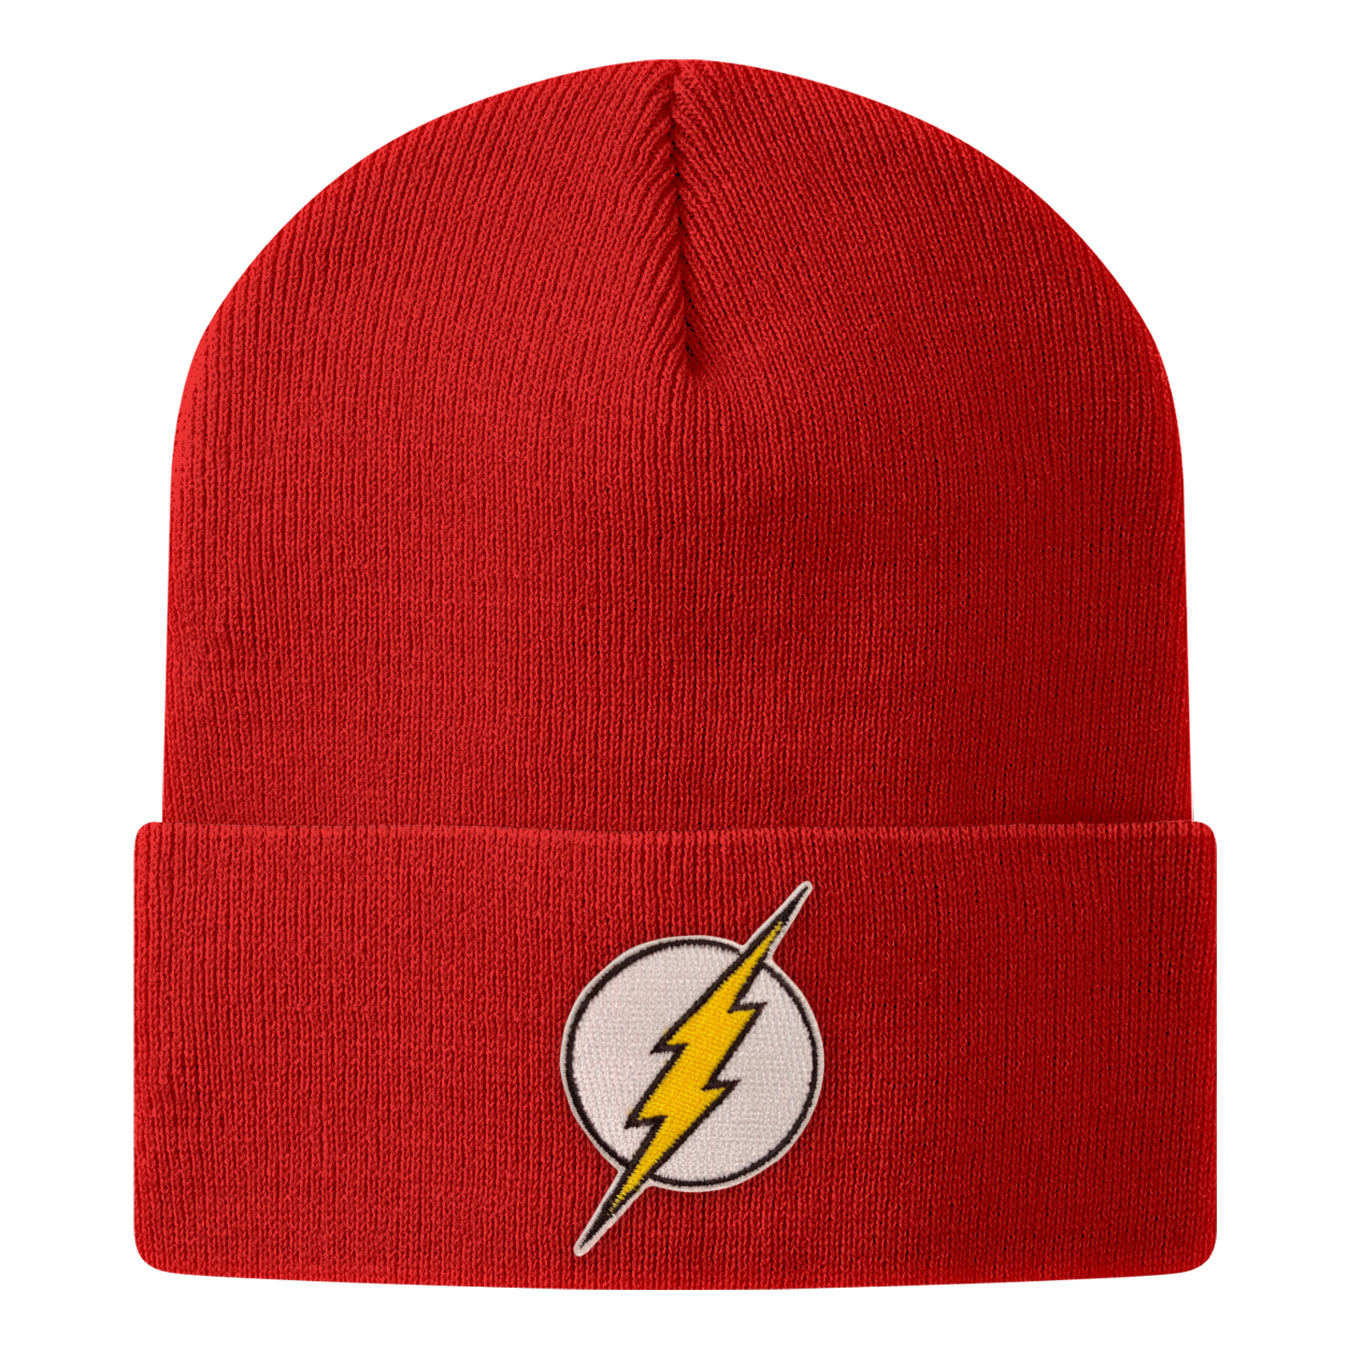 Cap Snapback Premium - Flash The Shirtstore